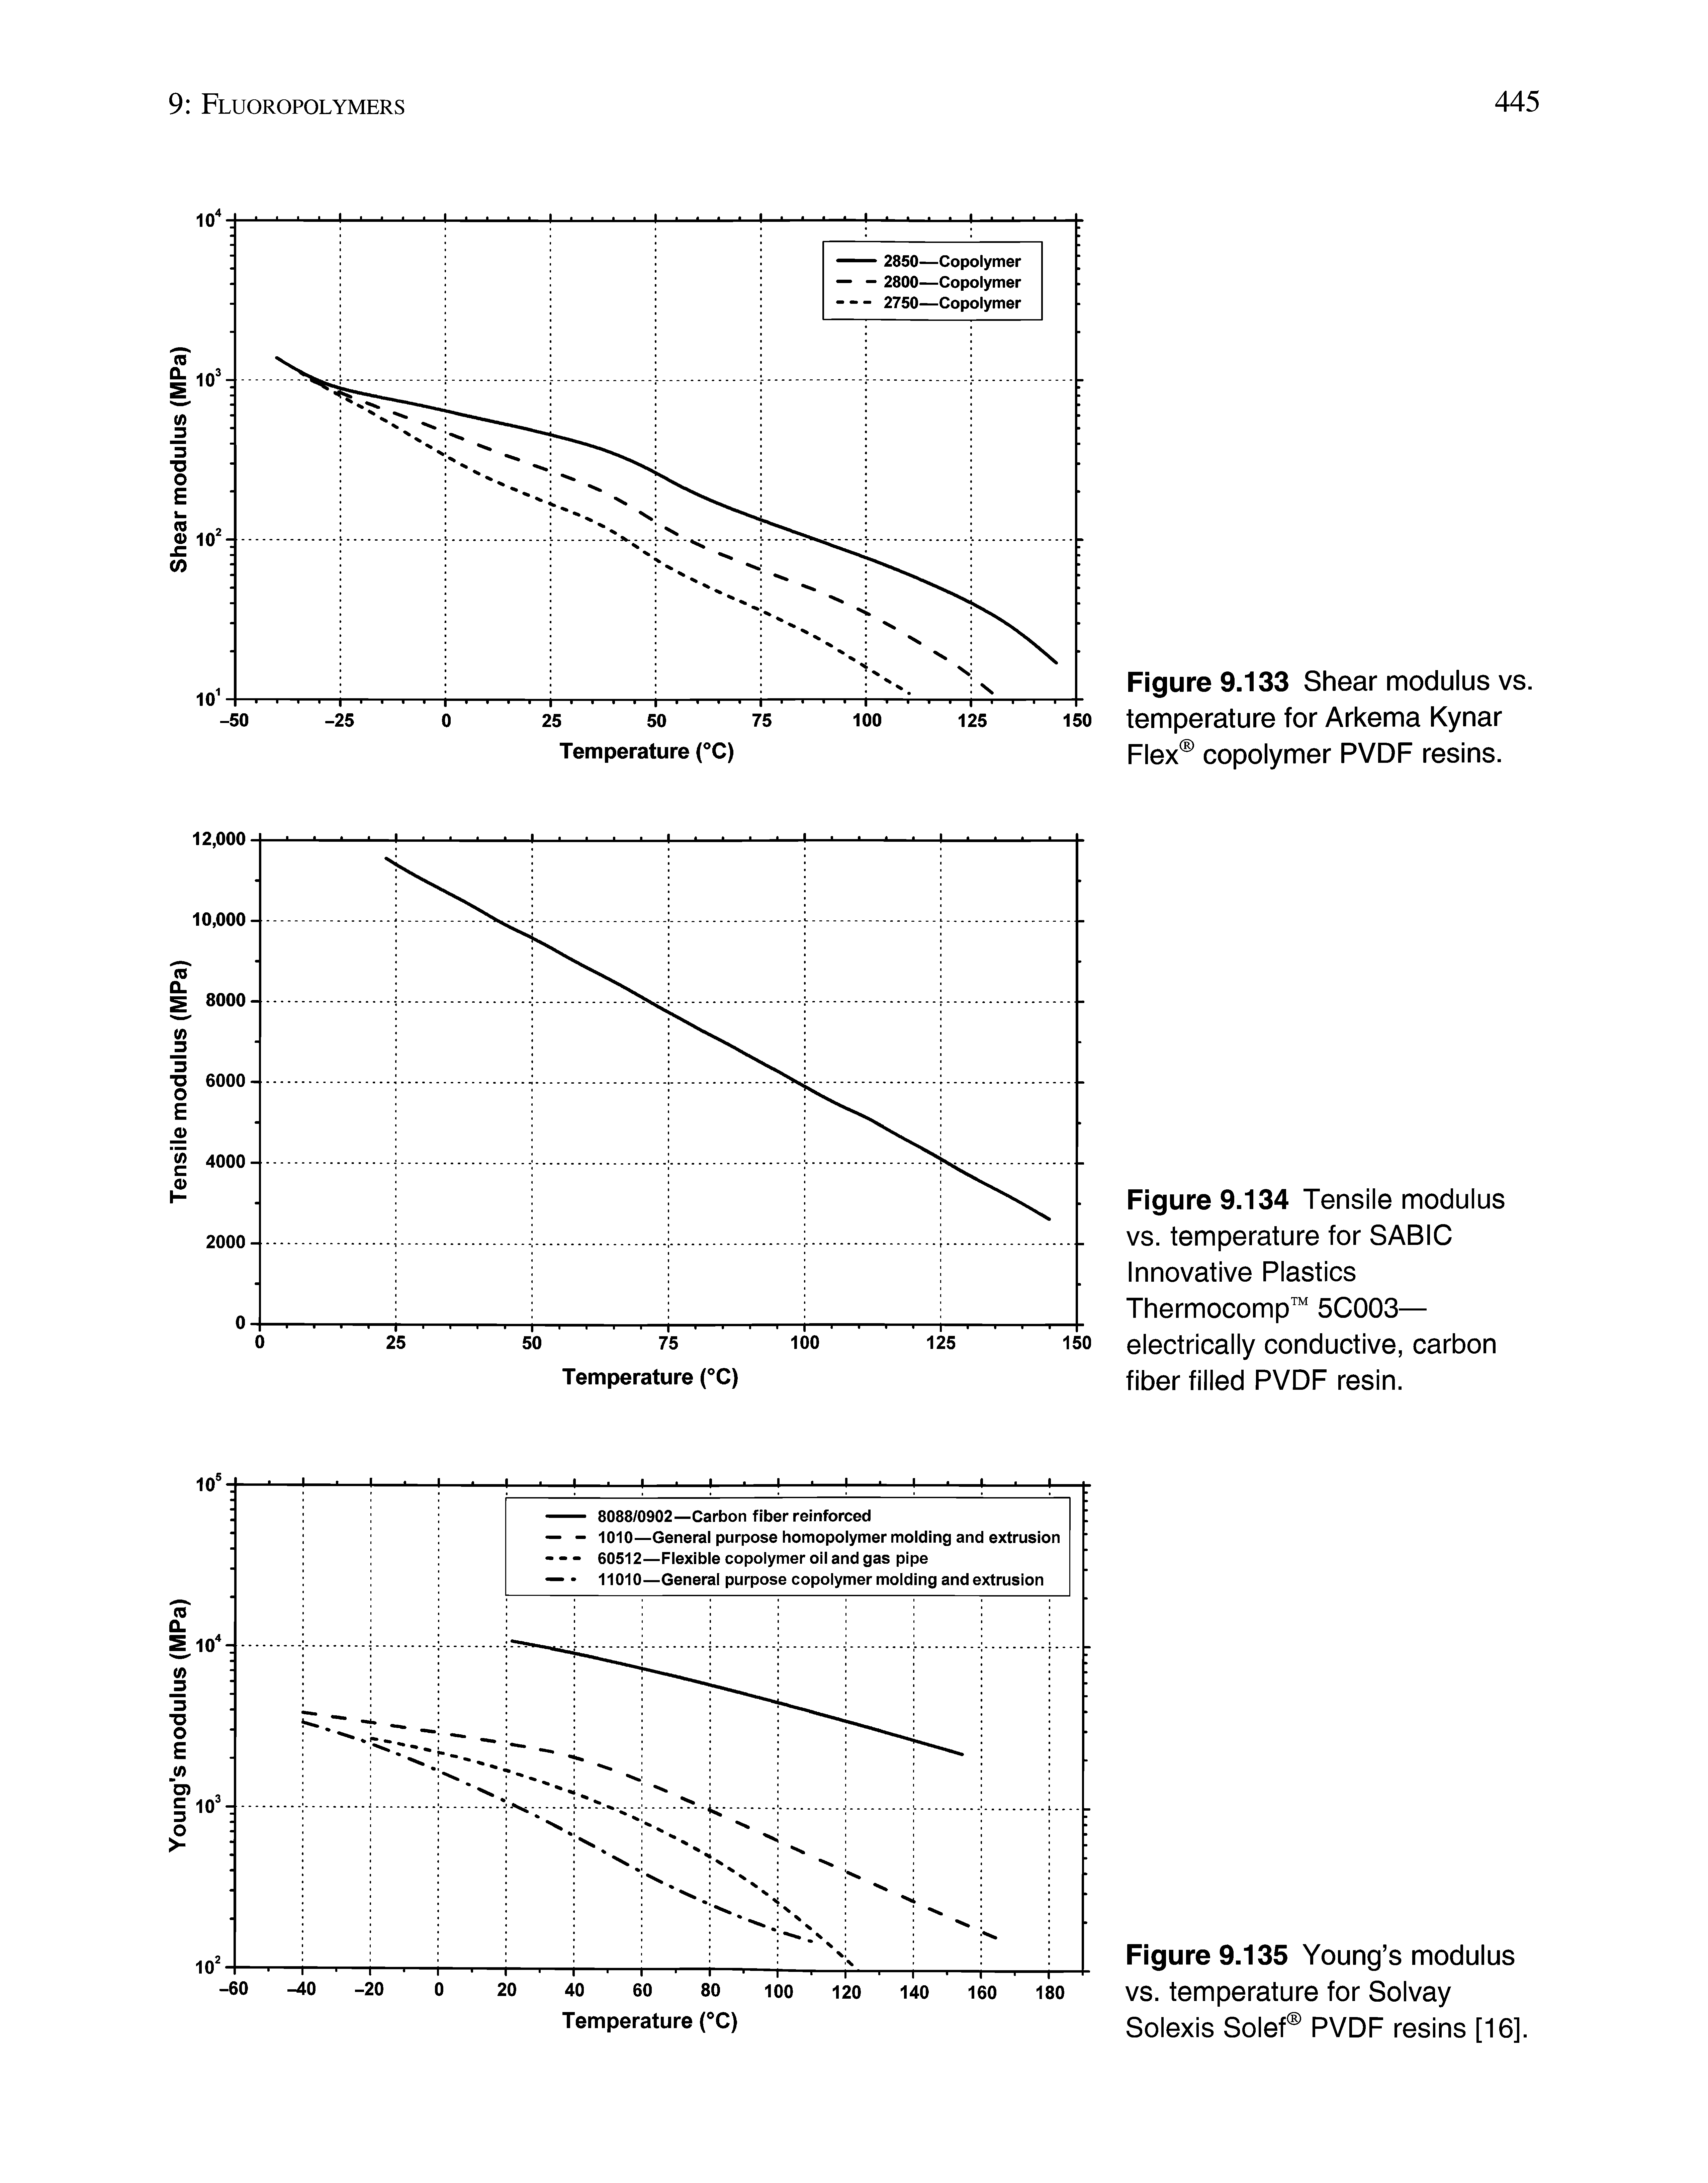 Figure 9.133 Shear modulus vs. temperature for Arkema Kynar Flex copolymer PVDF resins.